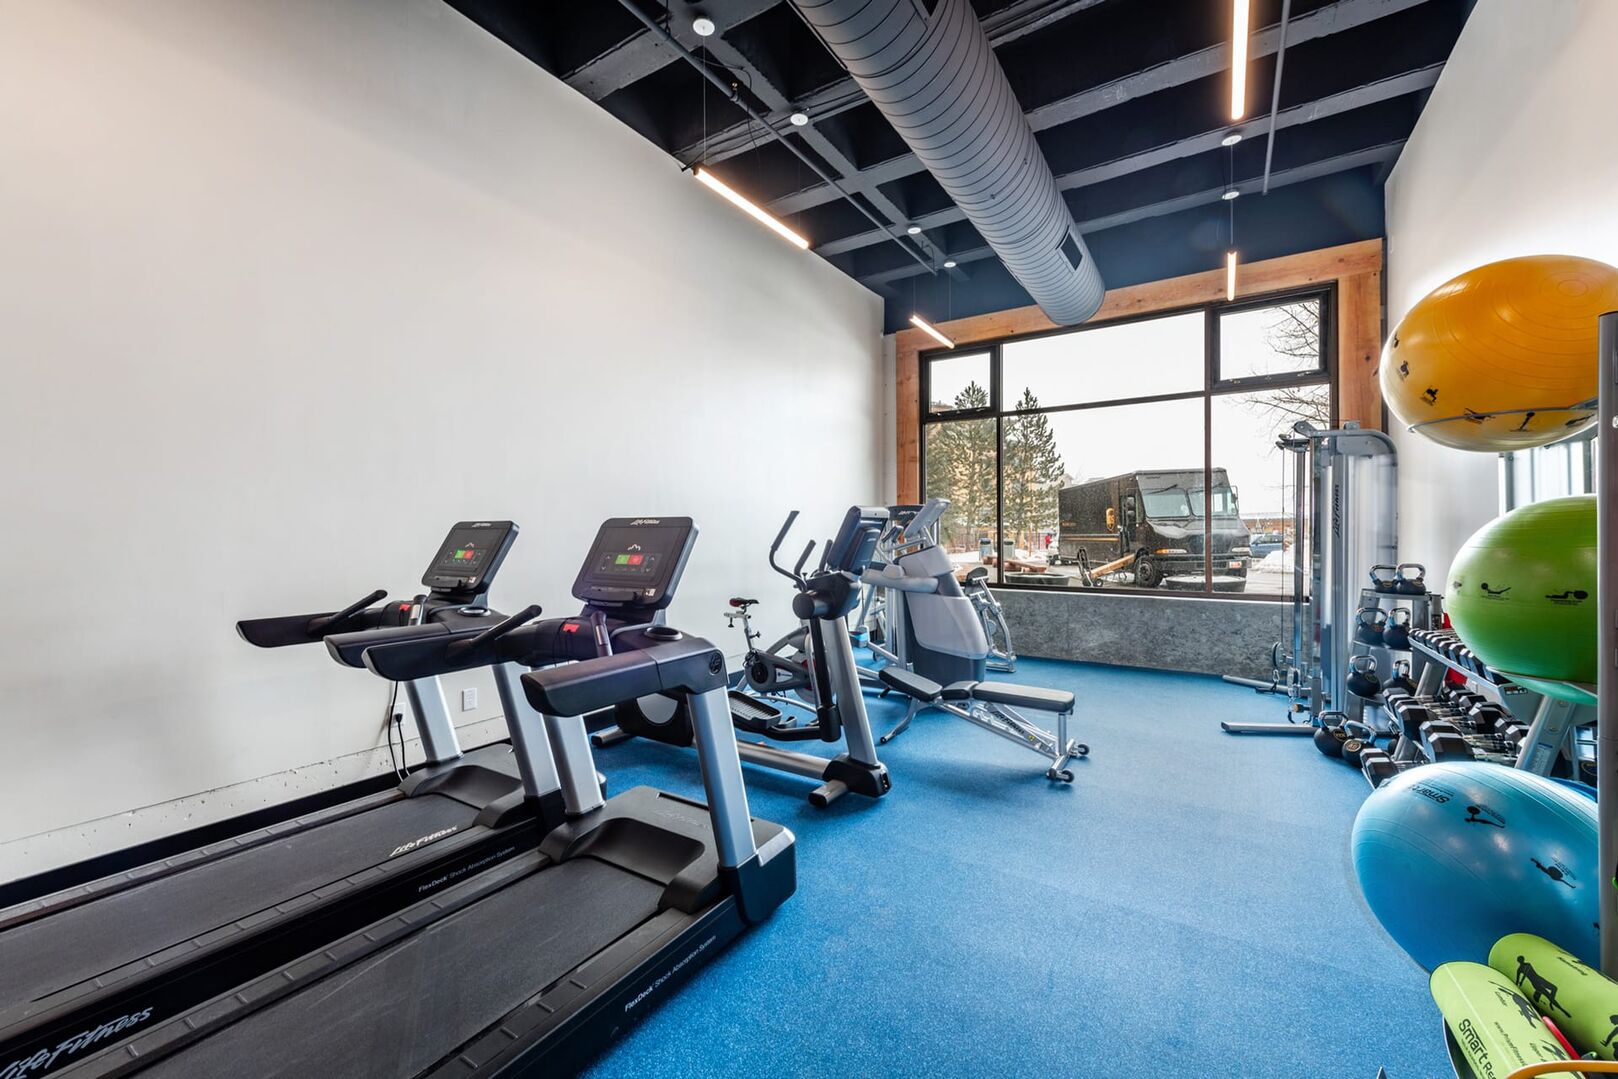 Sundial Lodge fitness room with cardio machine